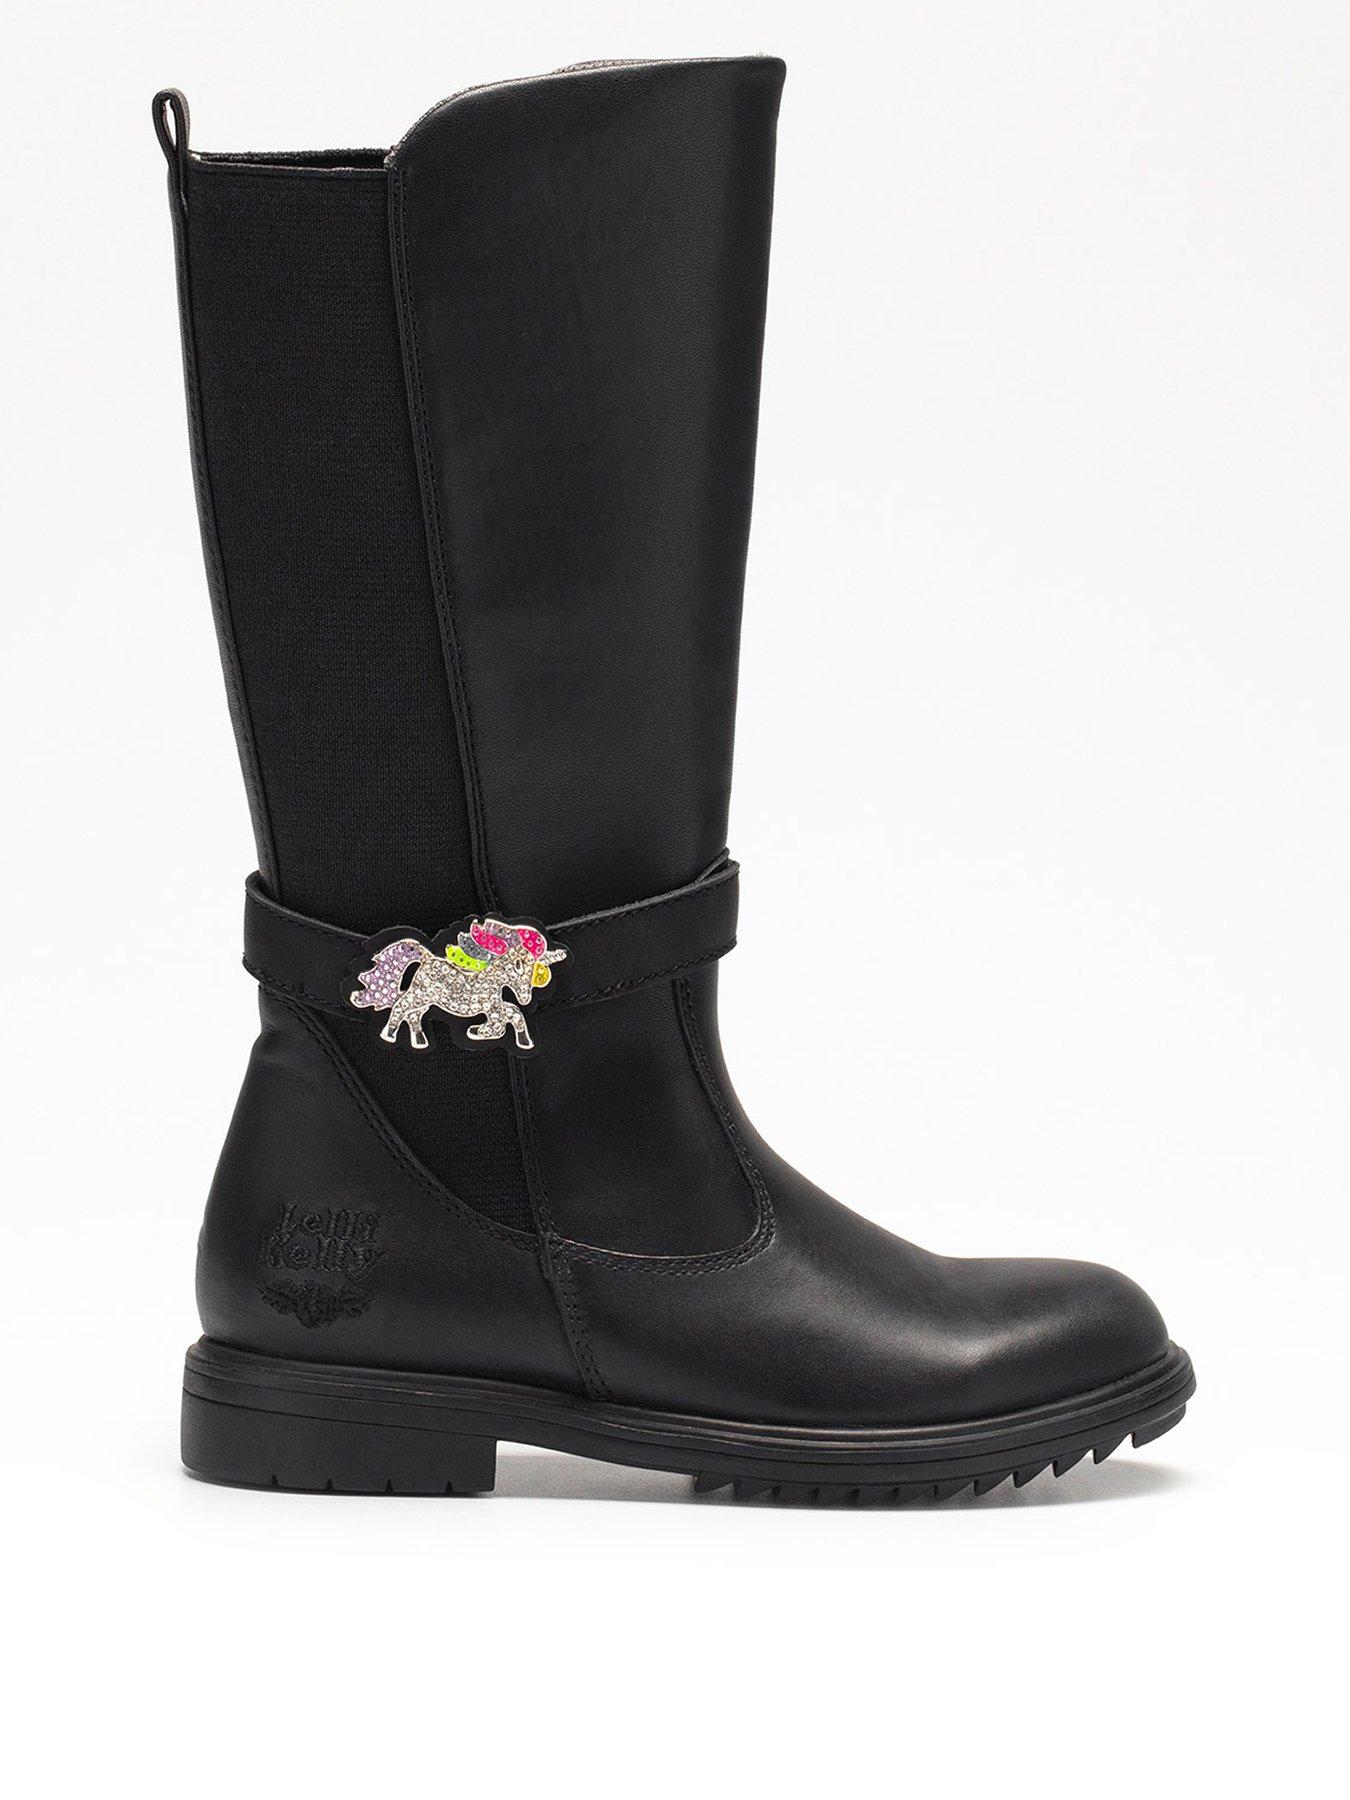 girls black boots sale